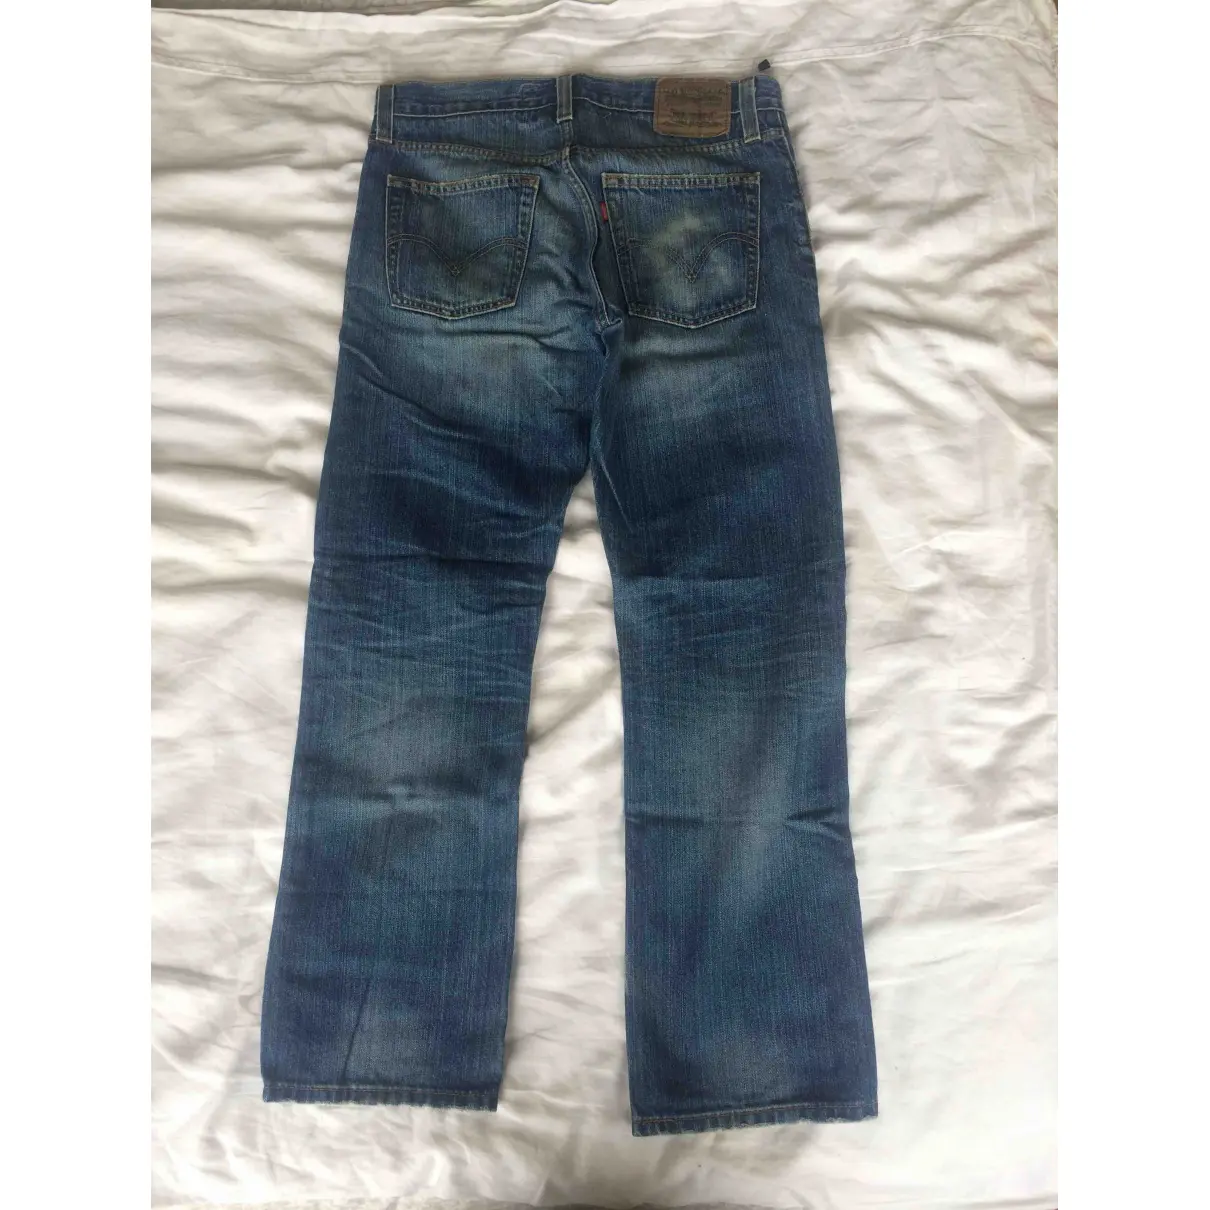 Buy Levi's 514 straight jeans online - Vintage